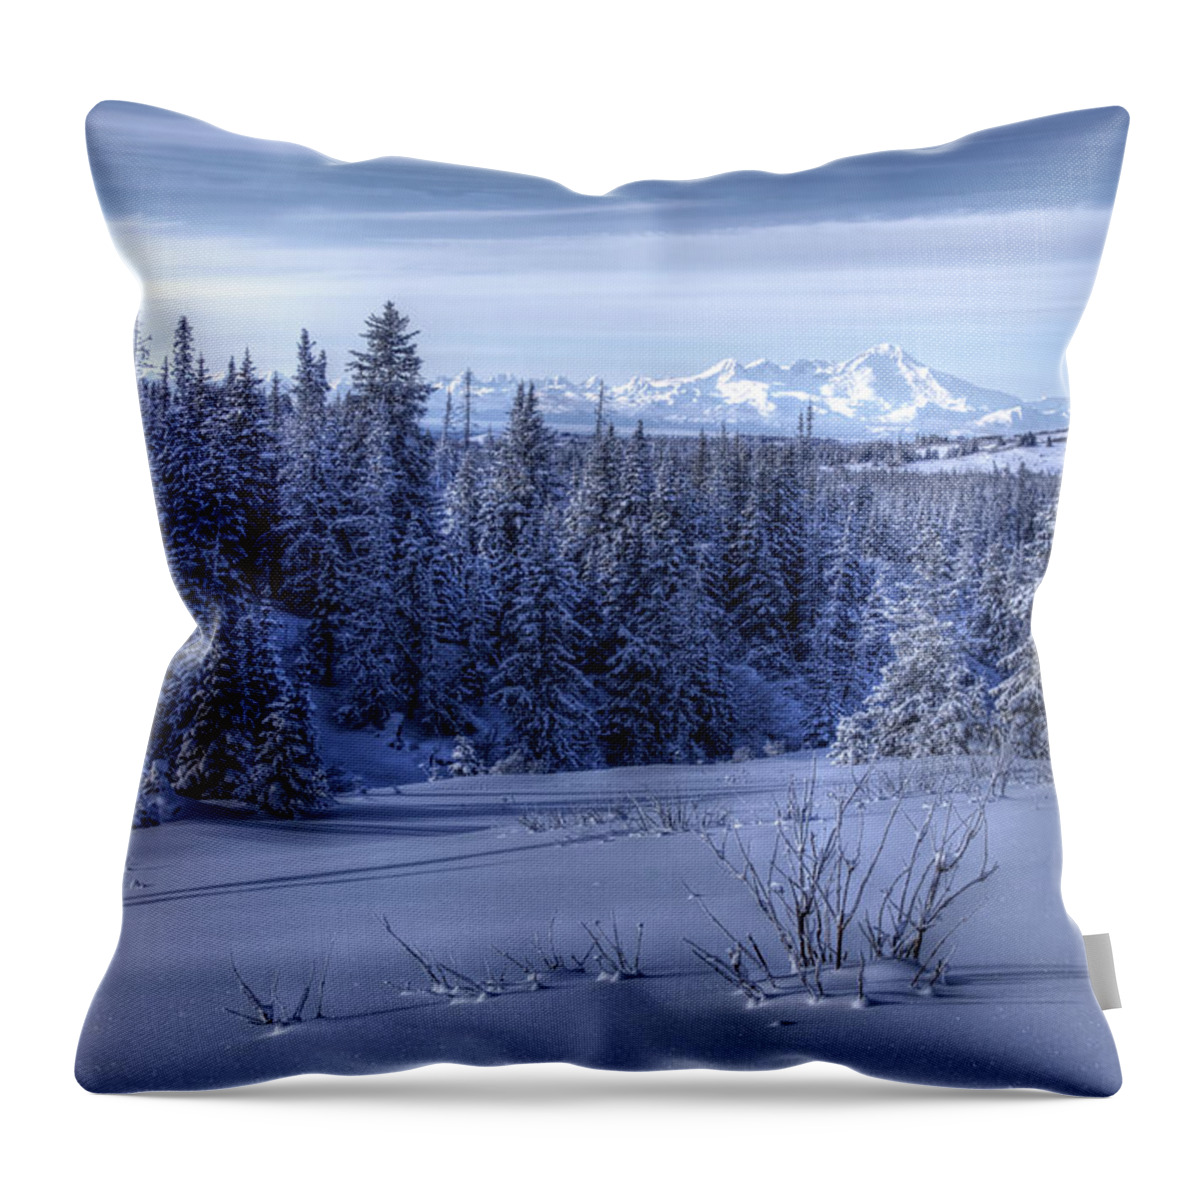 Alaska Throw Pillow featuring the photograph Alaskan Winter Landscape by Michele Cornelius